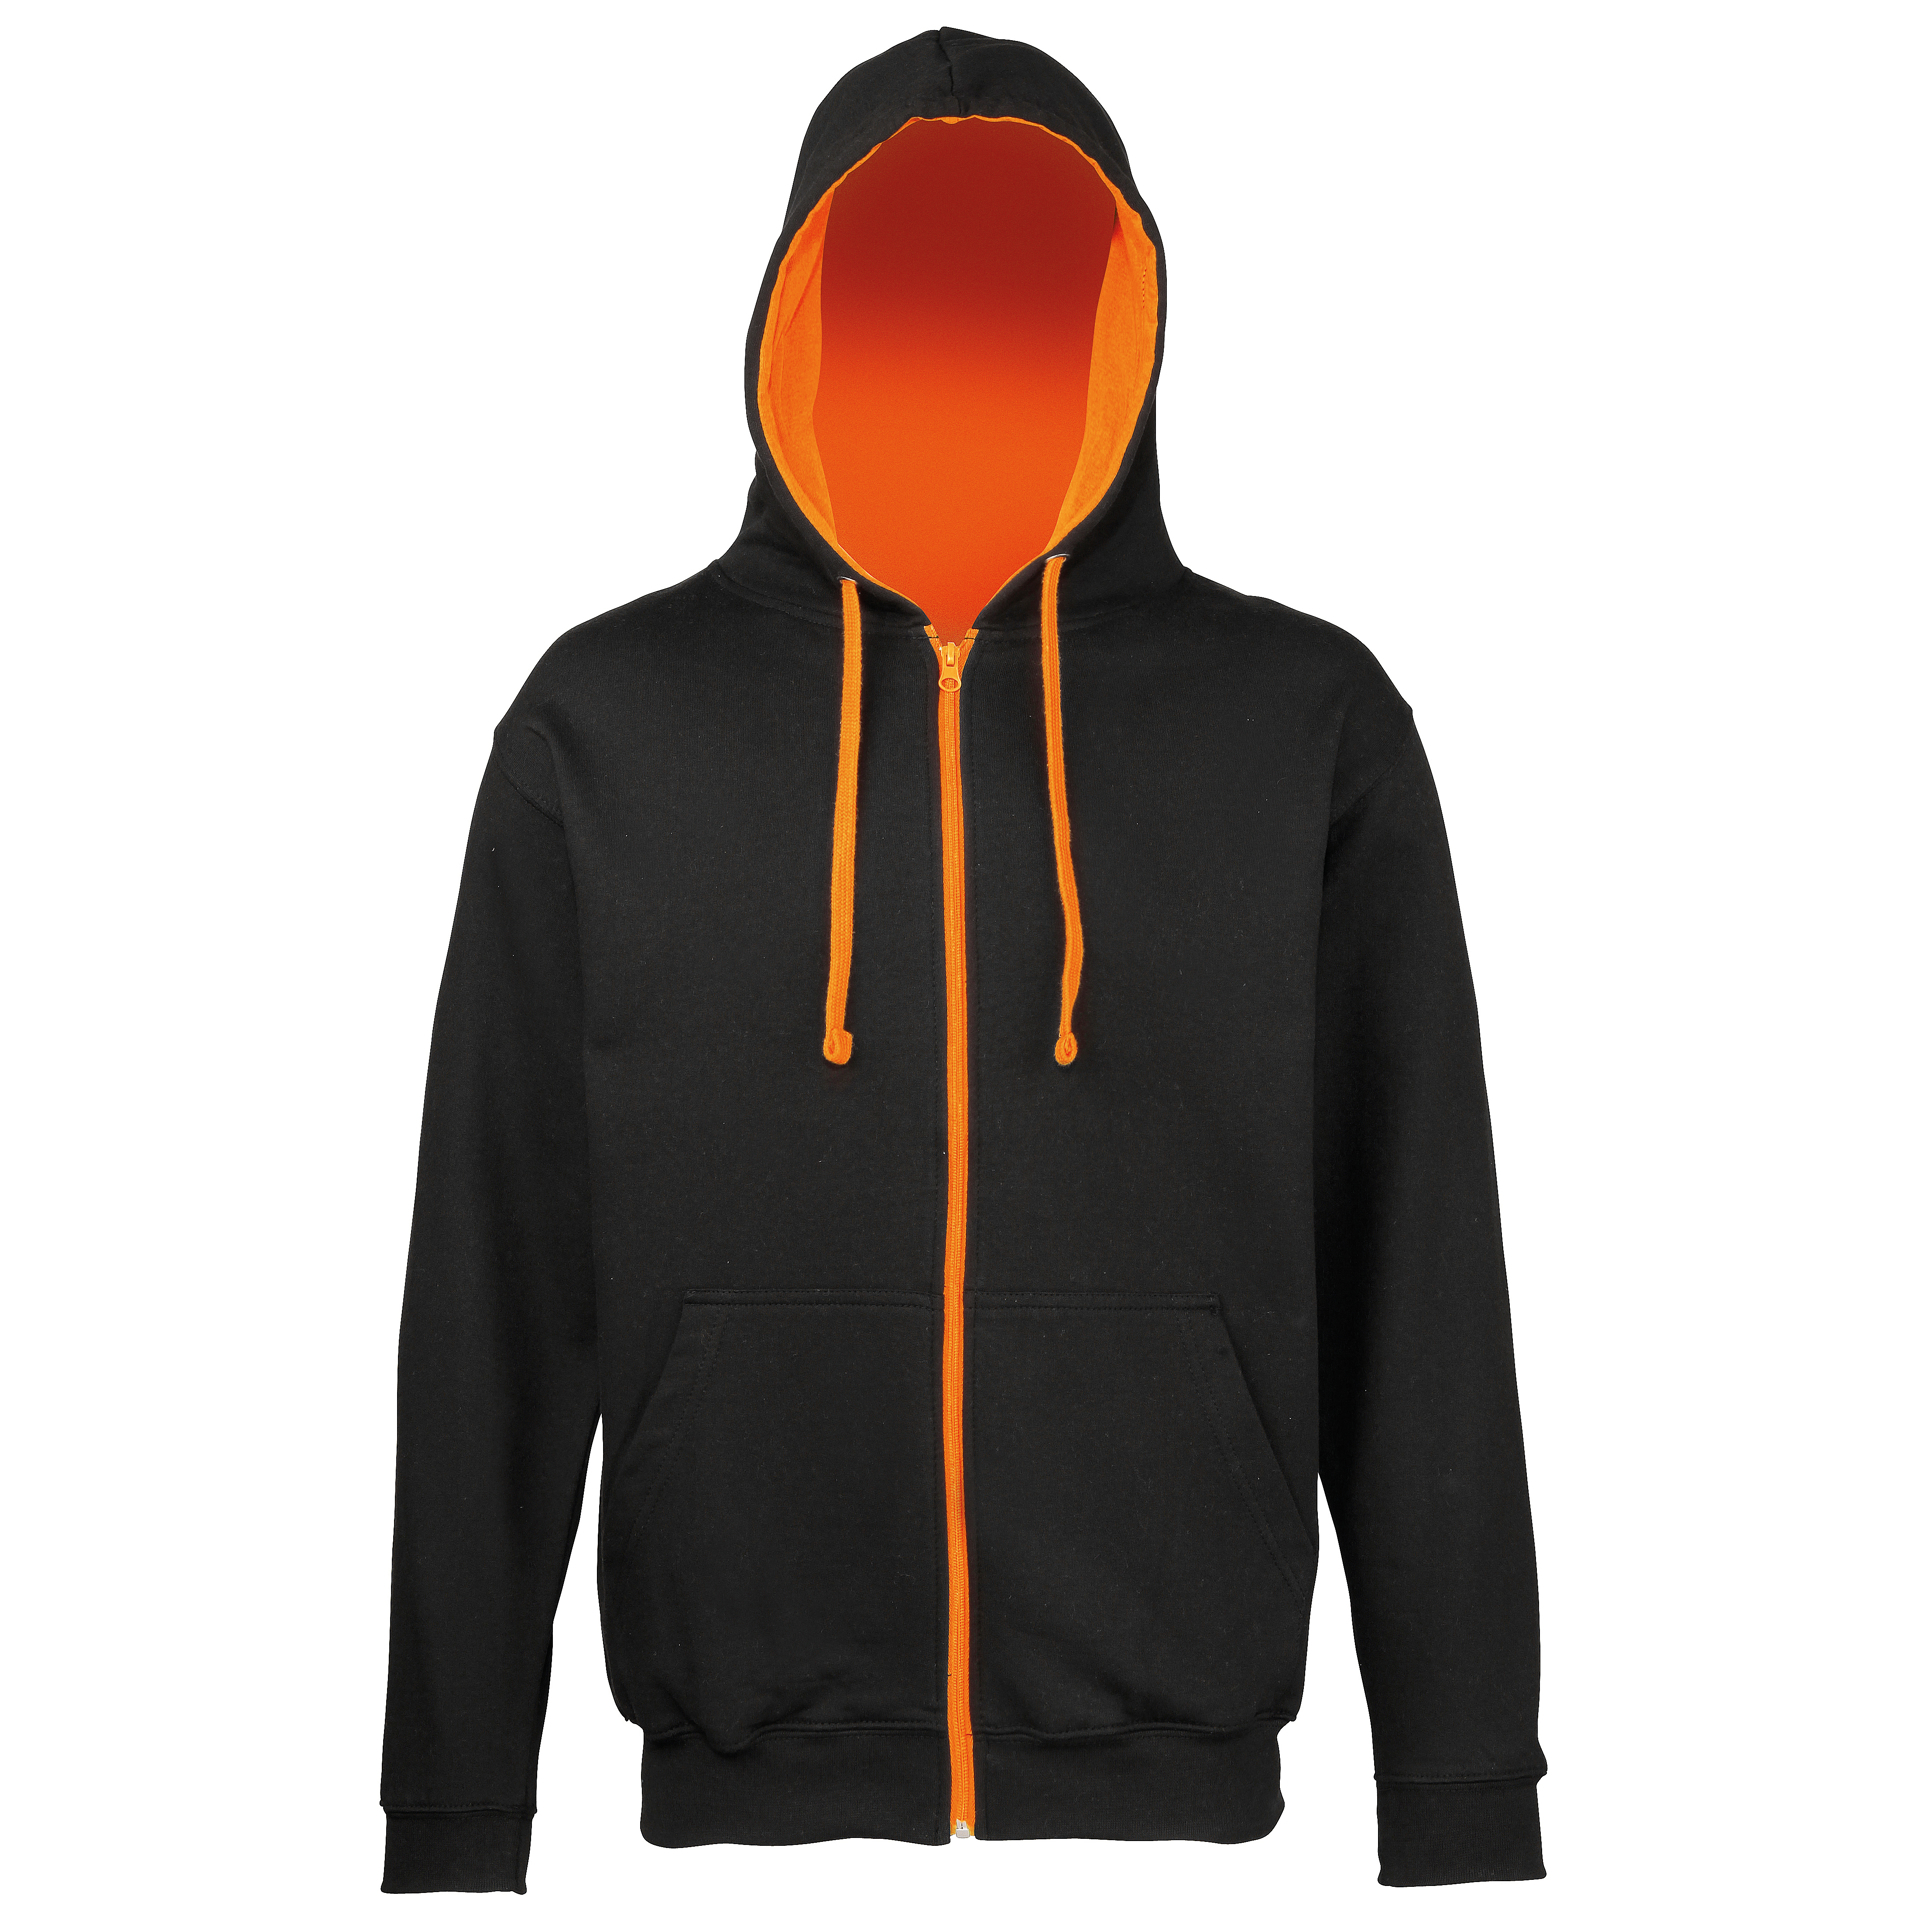 Men's Varsity Hoodie in black with orange details and lining